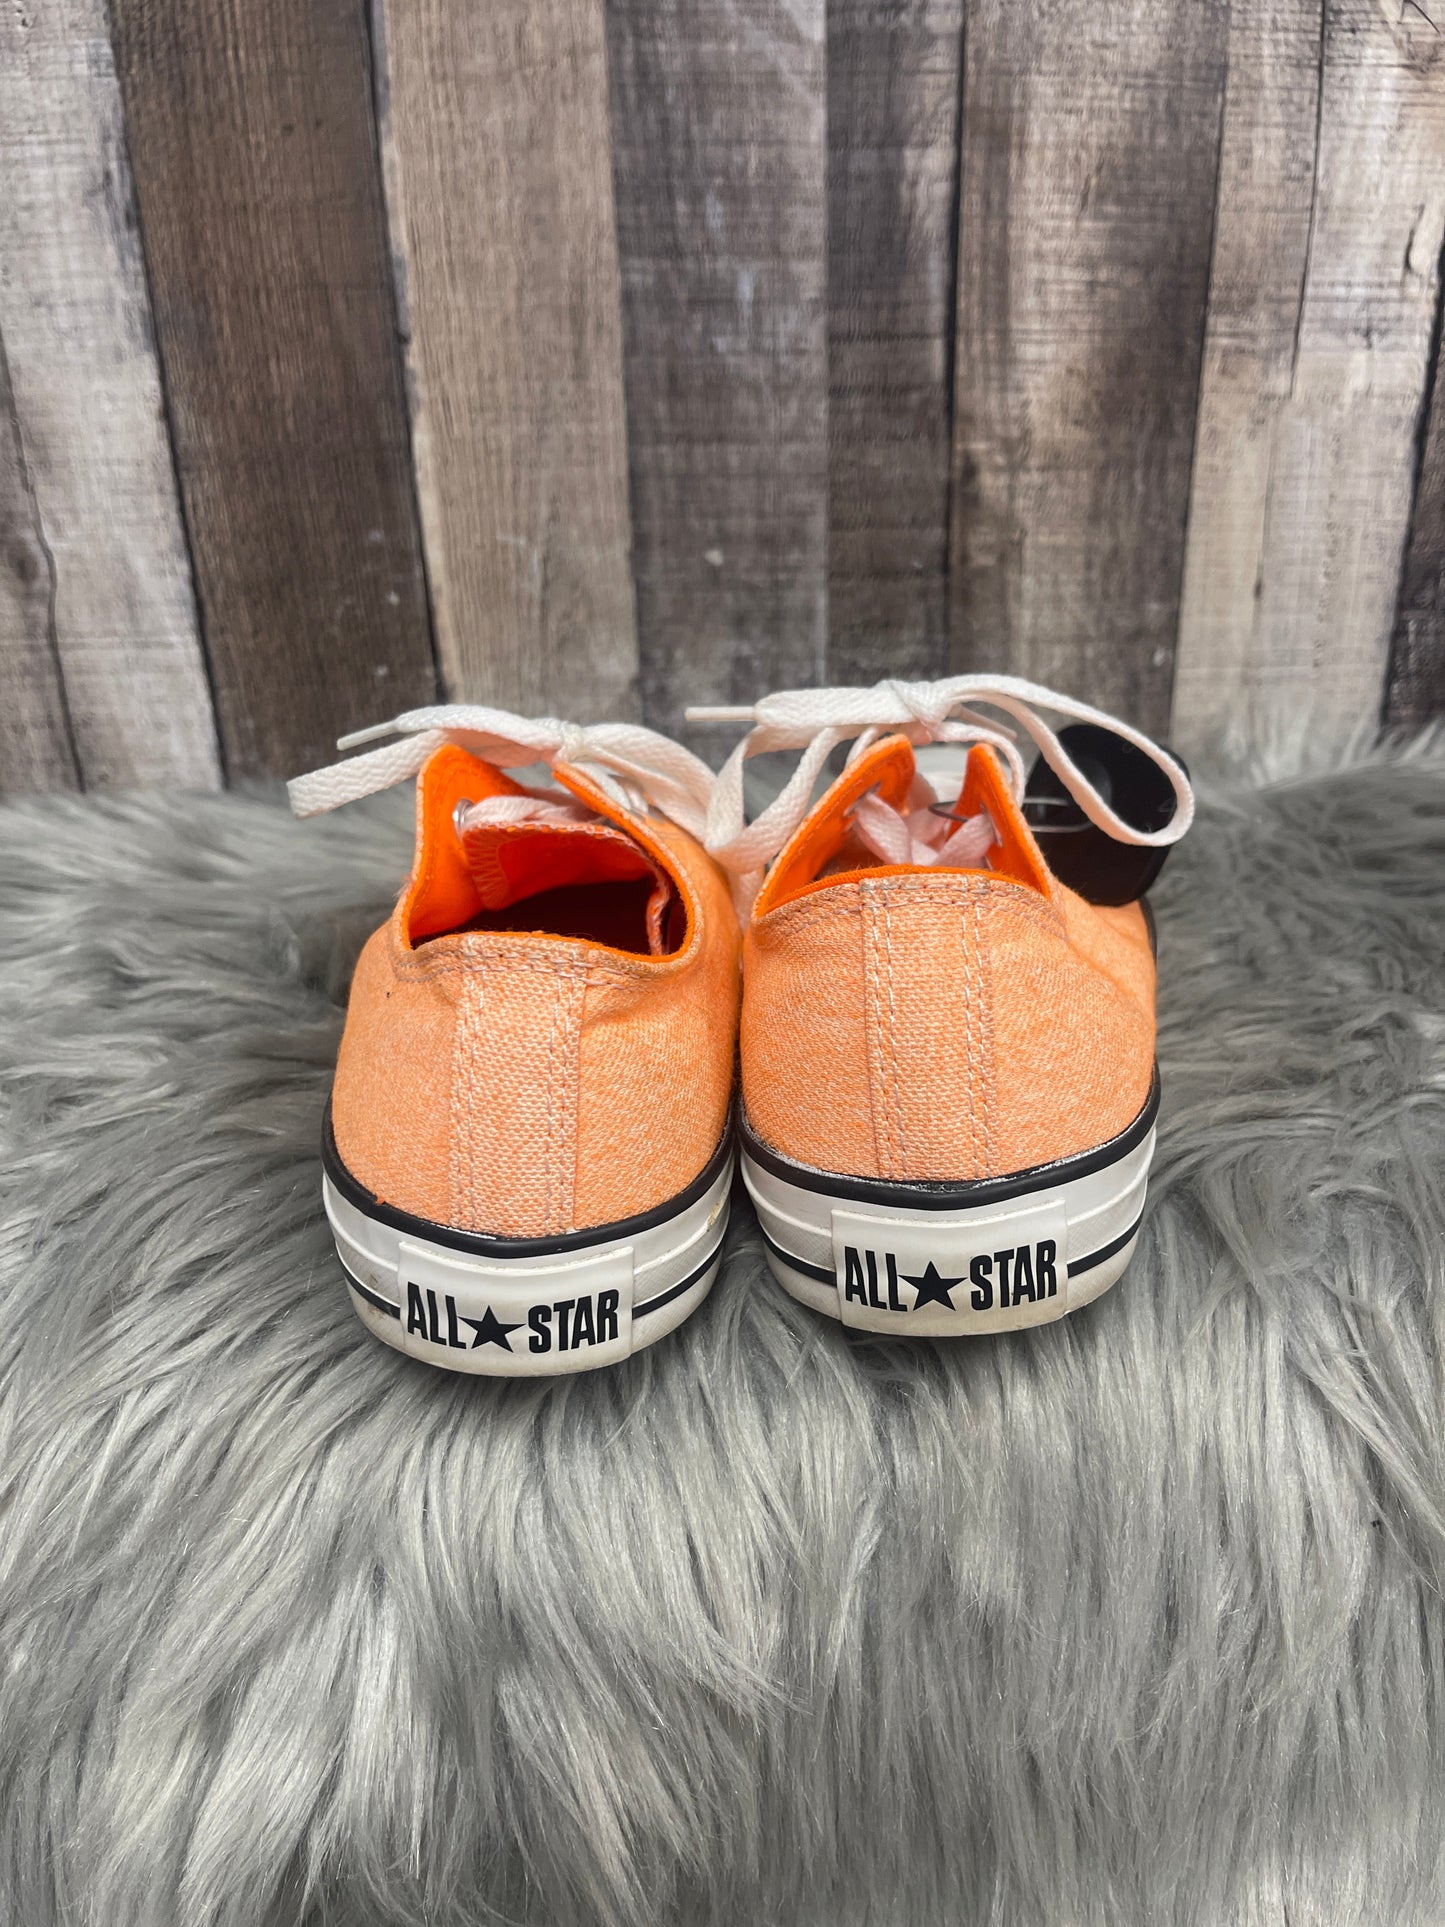 Orange Shoes Sneakers Converse, Size 9